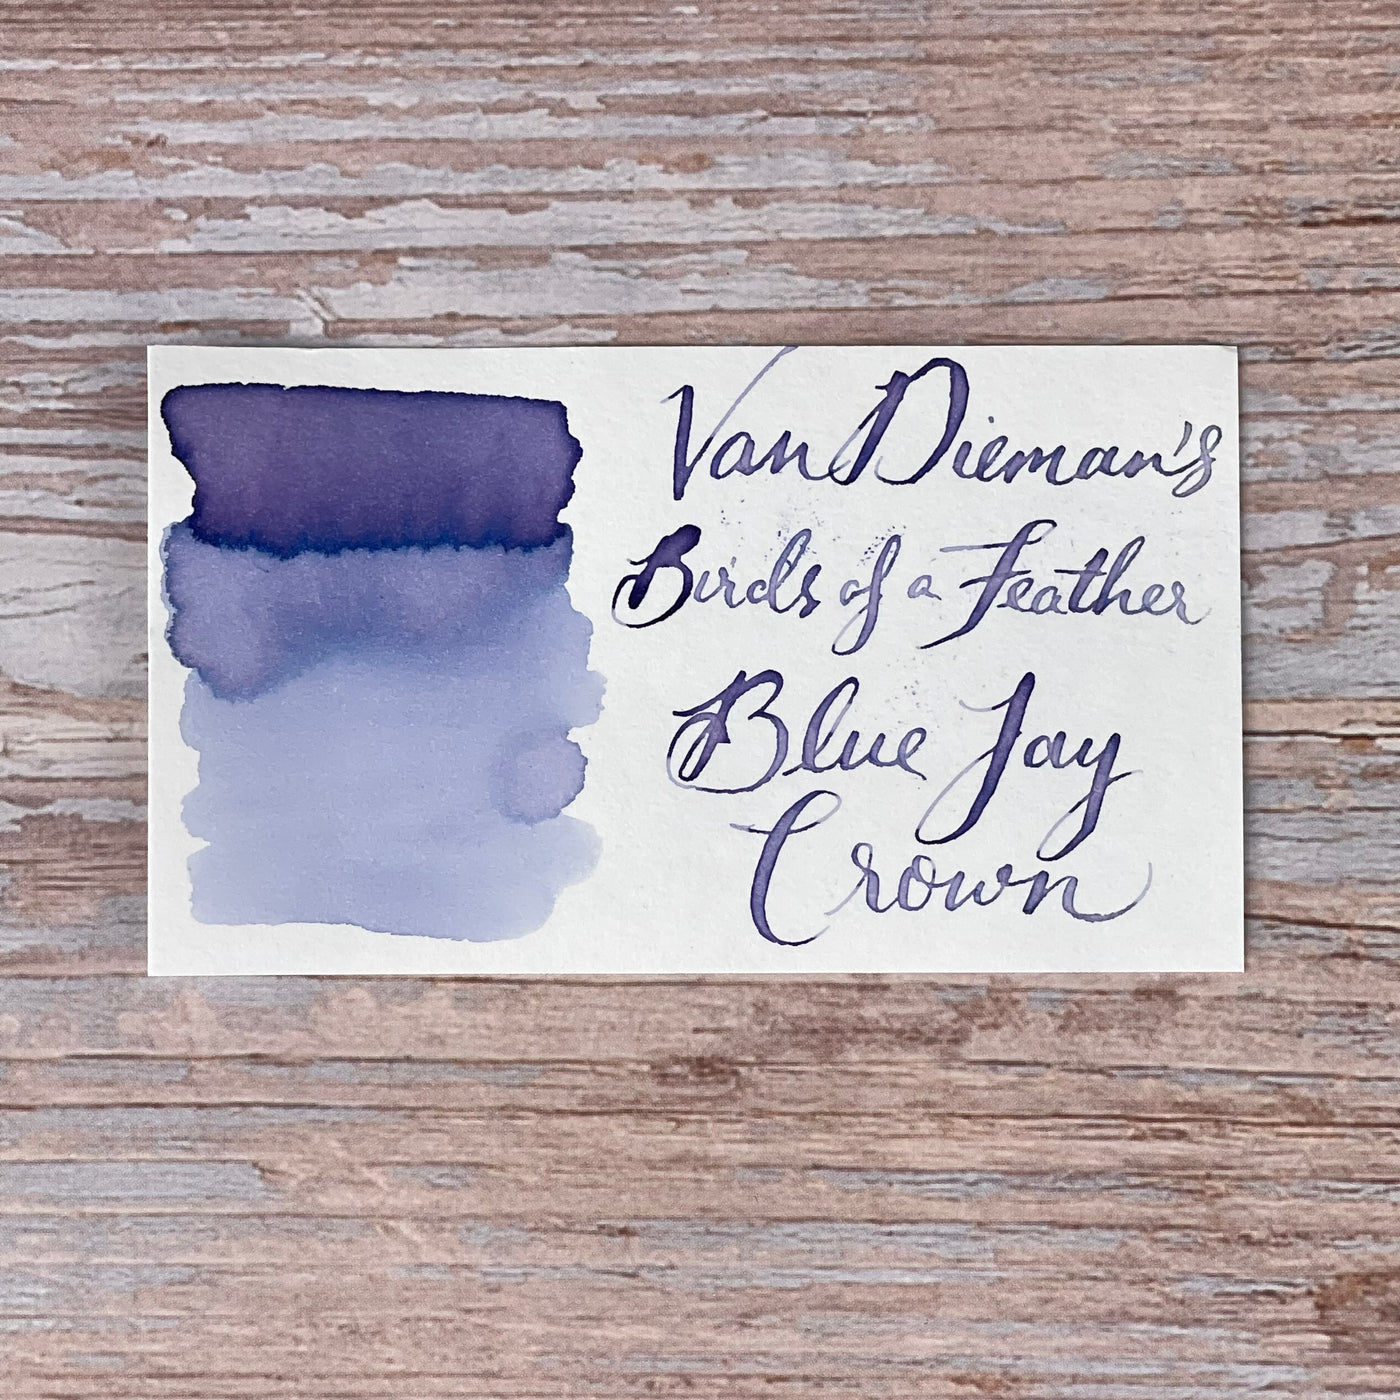 Van Dieman's Birds of a Feather - Blue Jay Crown - 30ml Bottled Ink